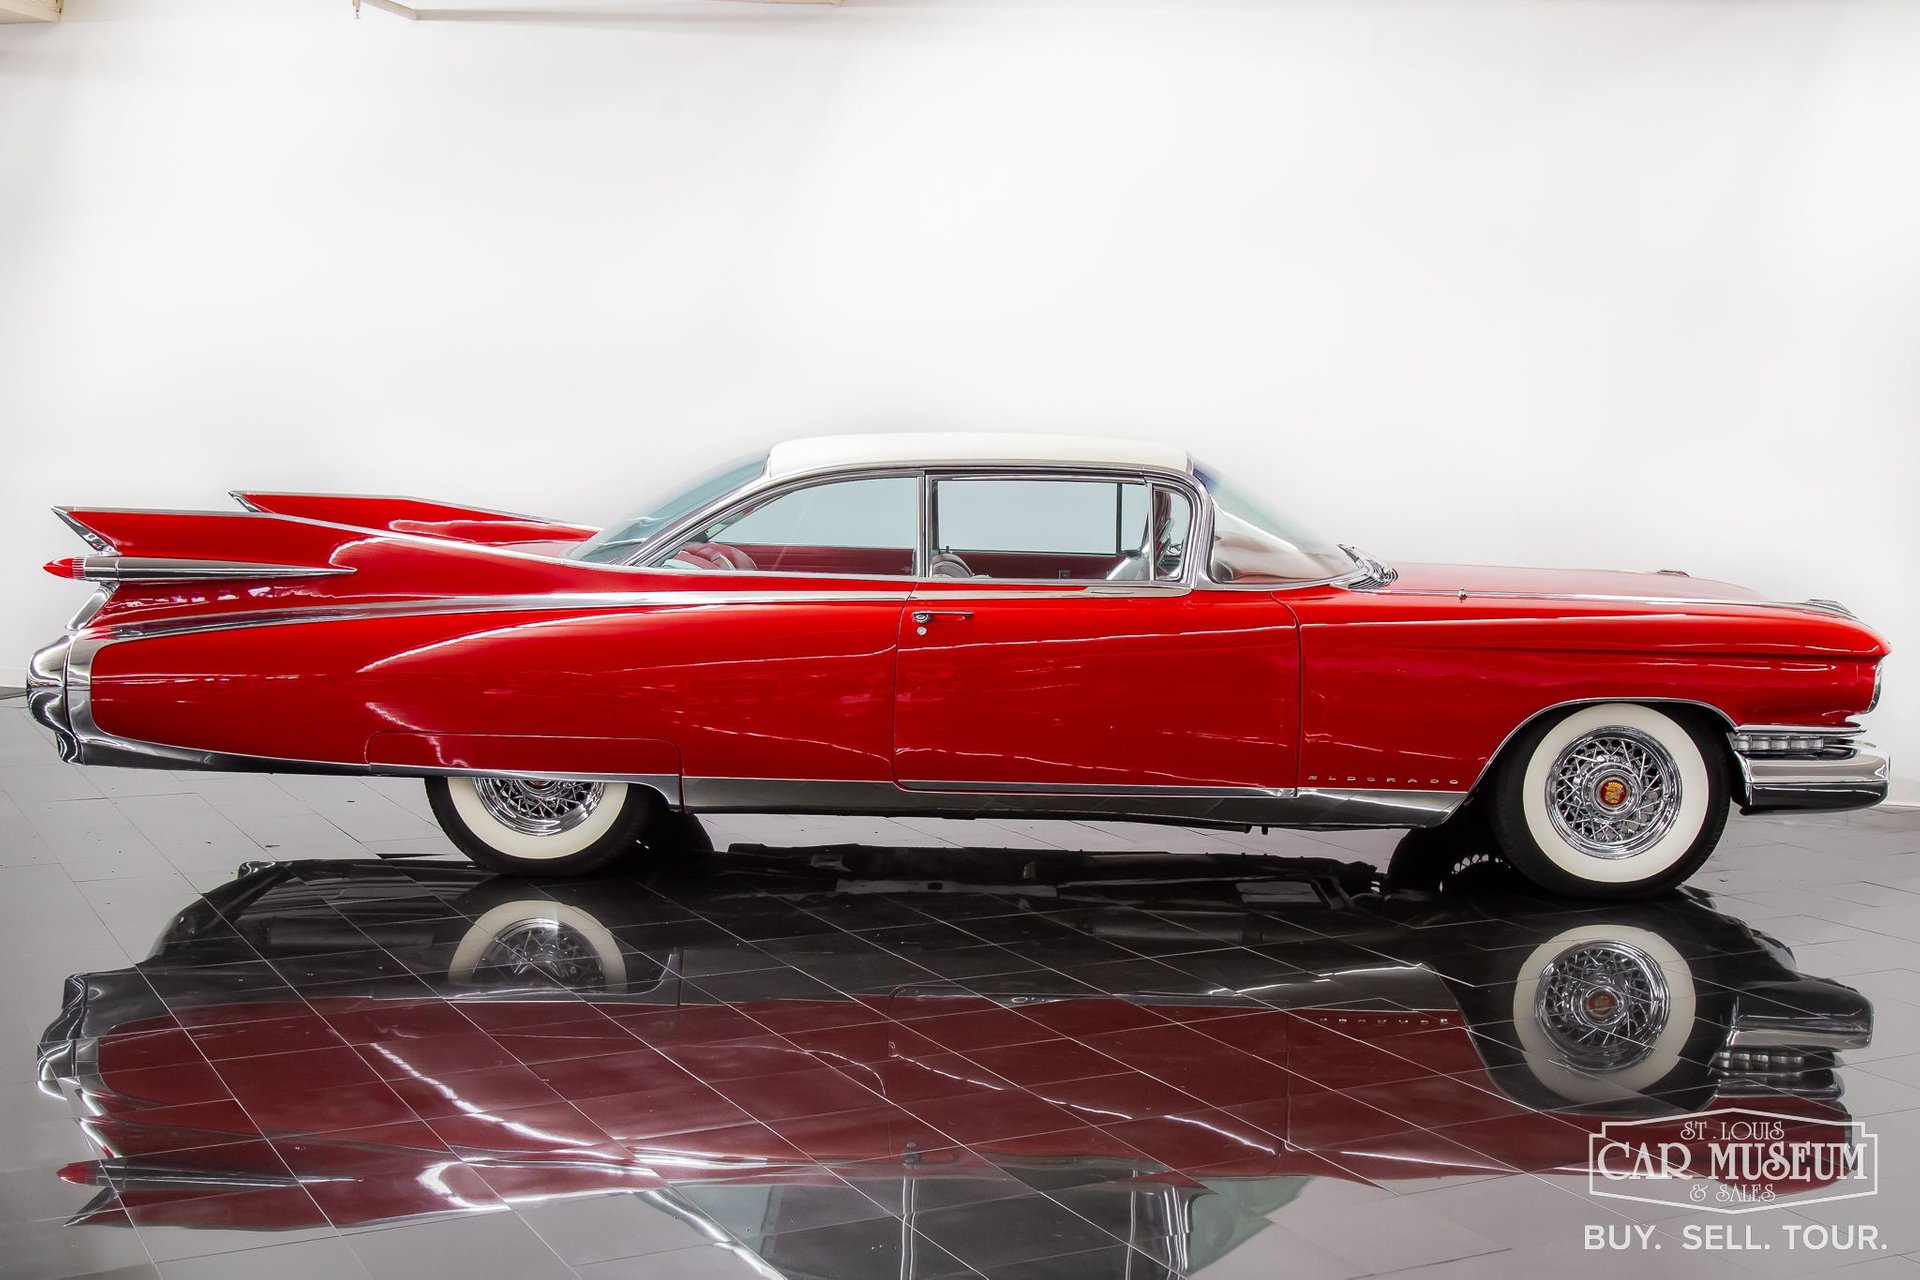 Best Quality ELDorado Made in USA 1959 1960 Cadillac outside Door Handles set